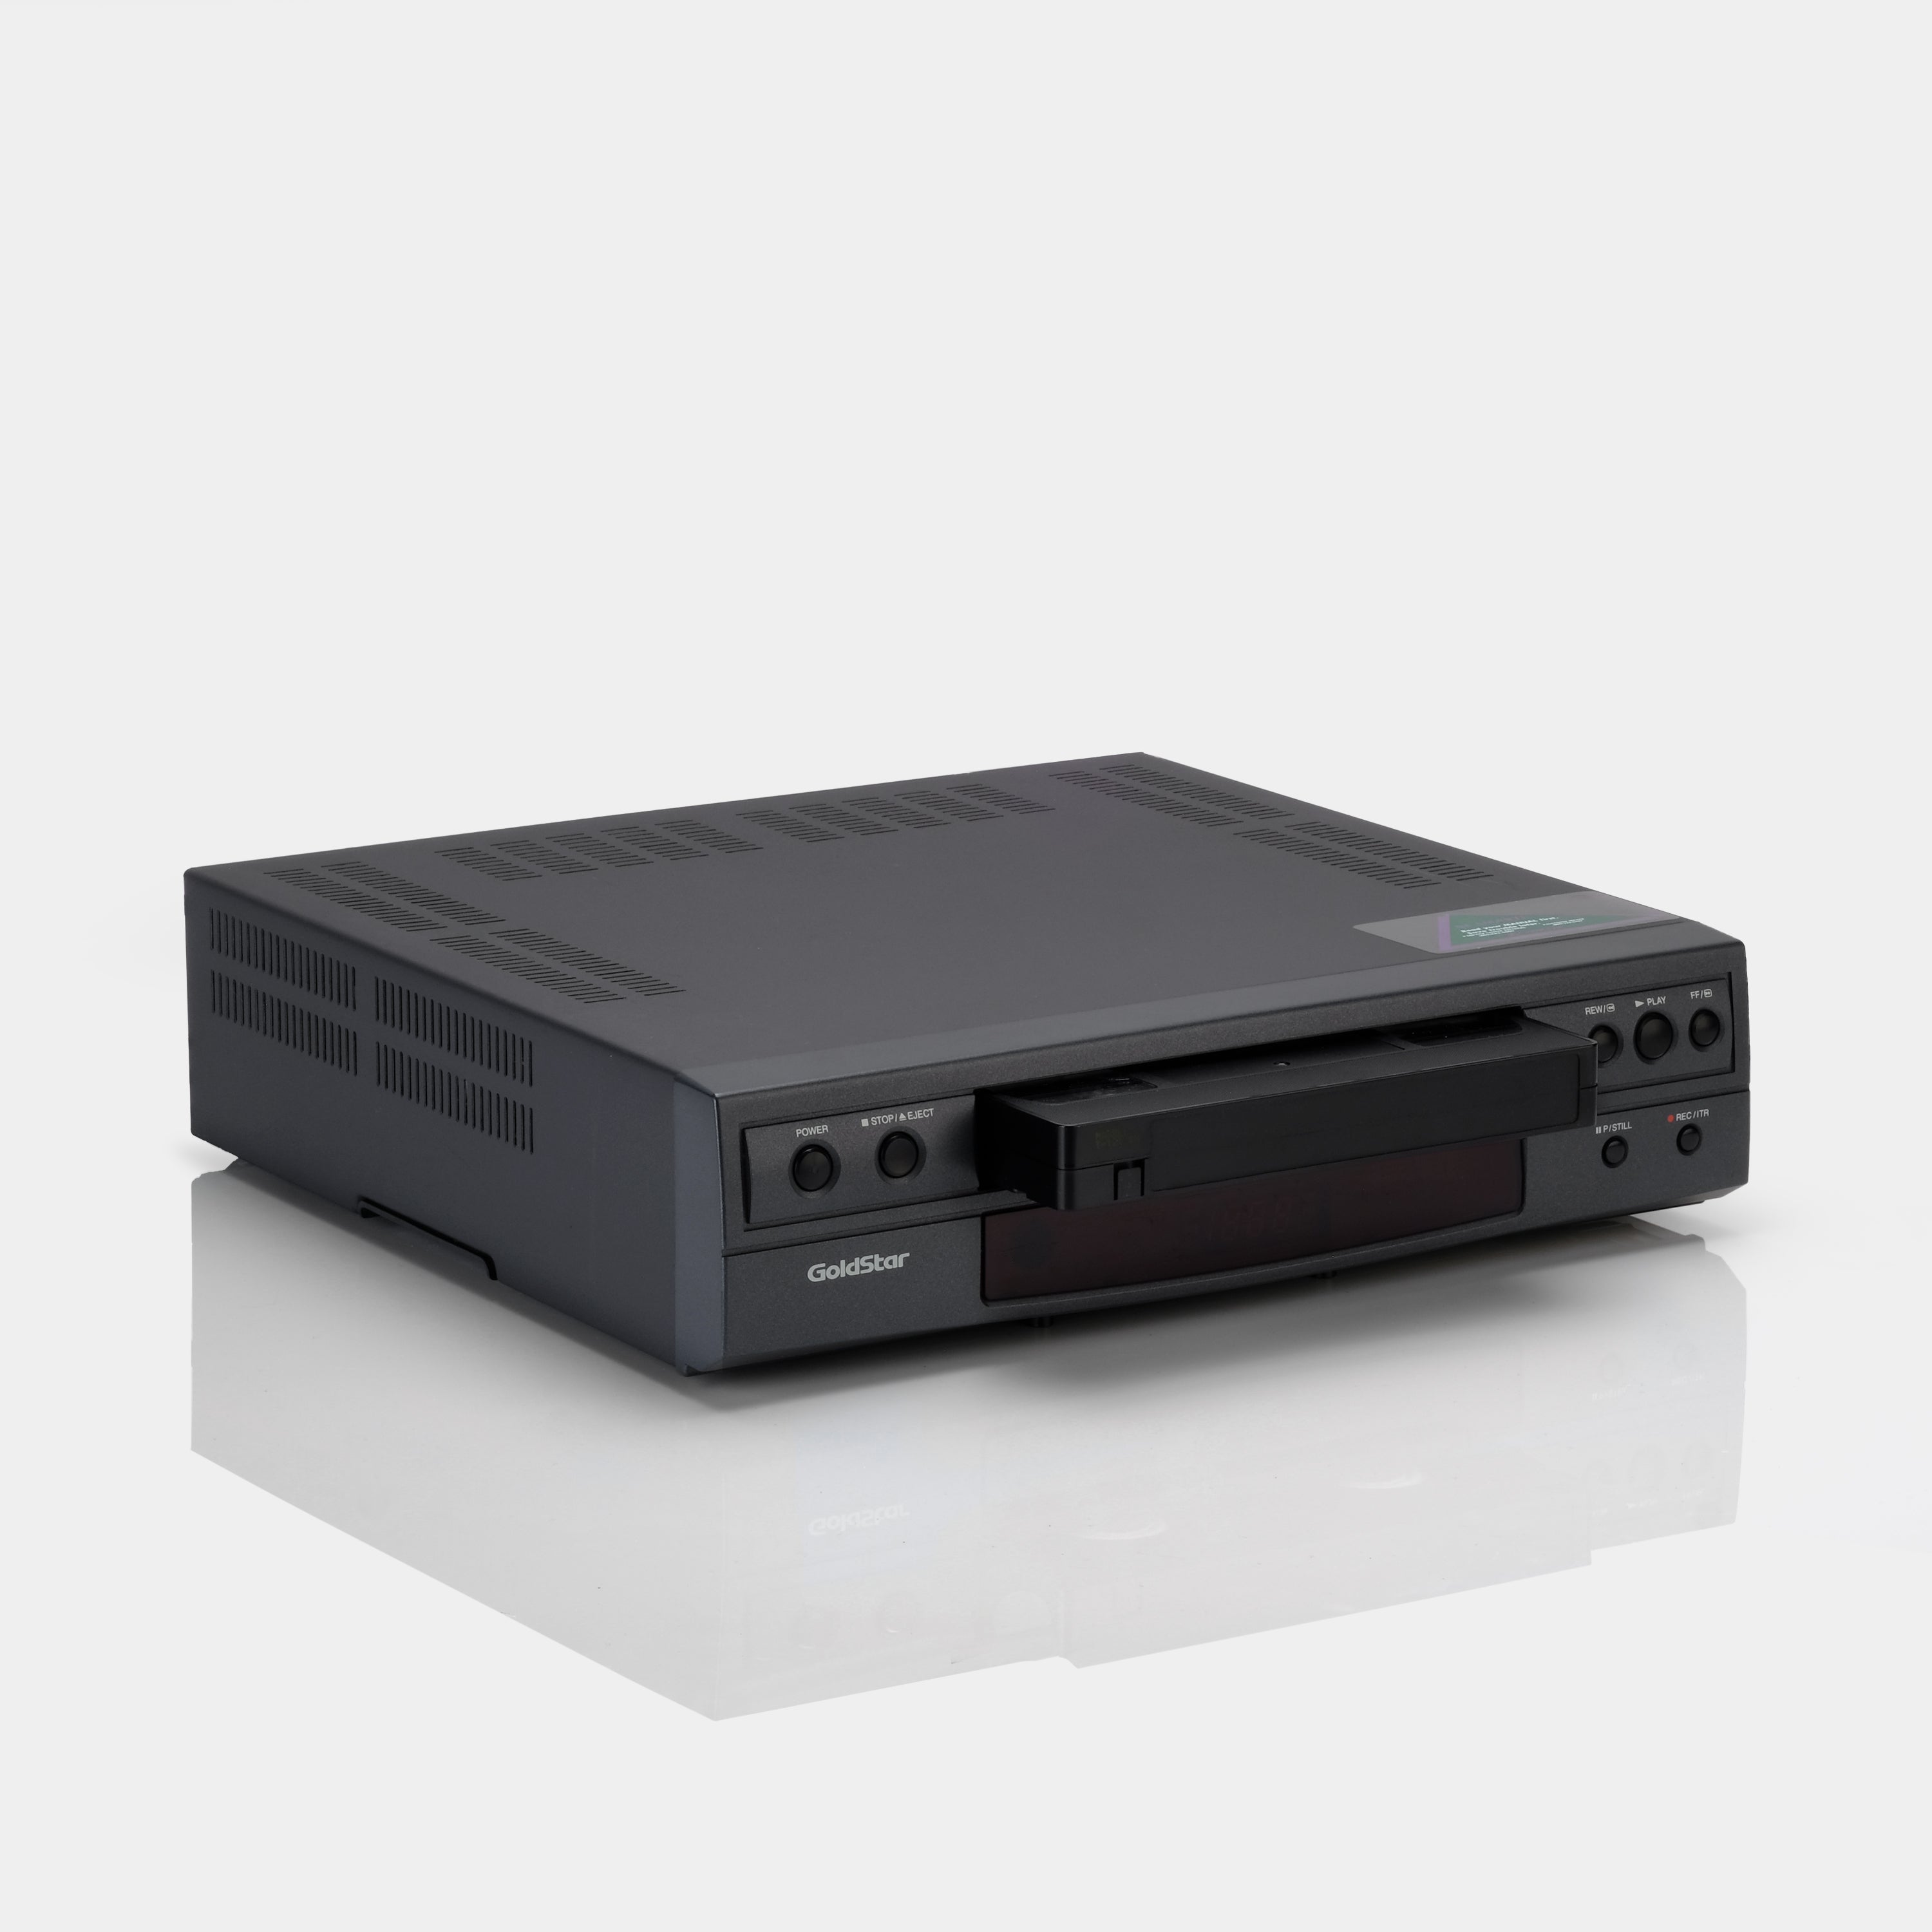 Goldstar GVR-C235 VCR VHS Player